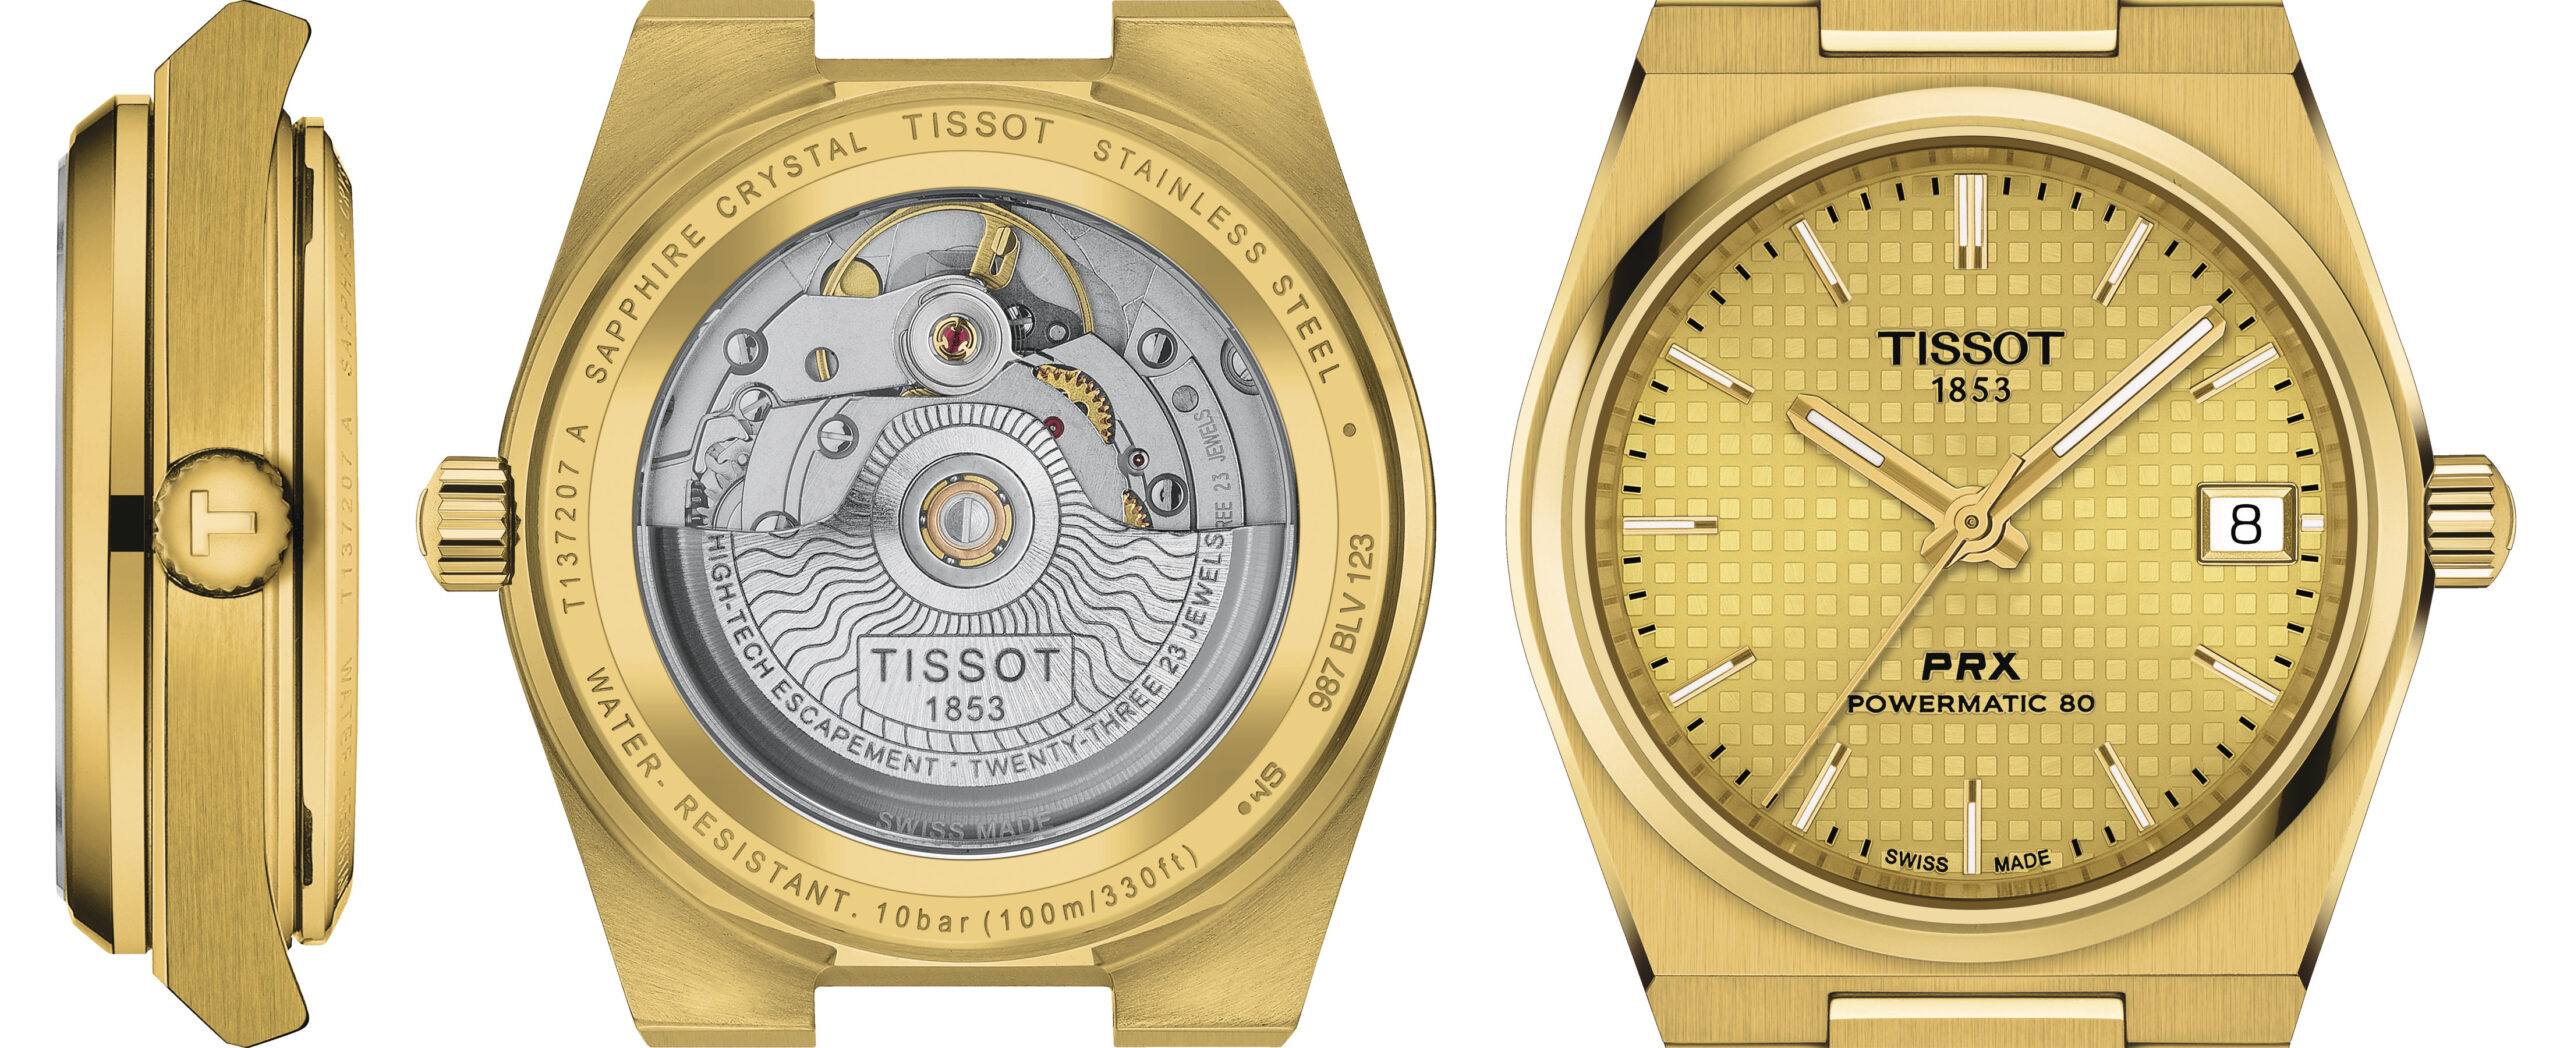 Tissot prx 35mm gold scaled